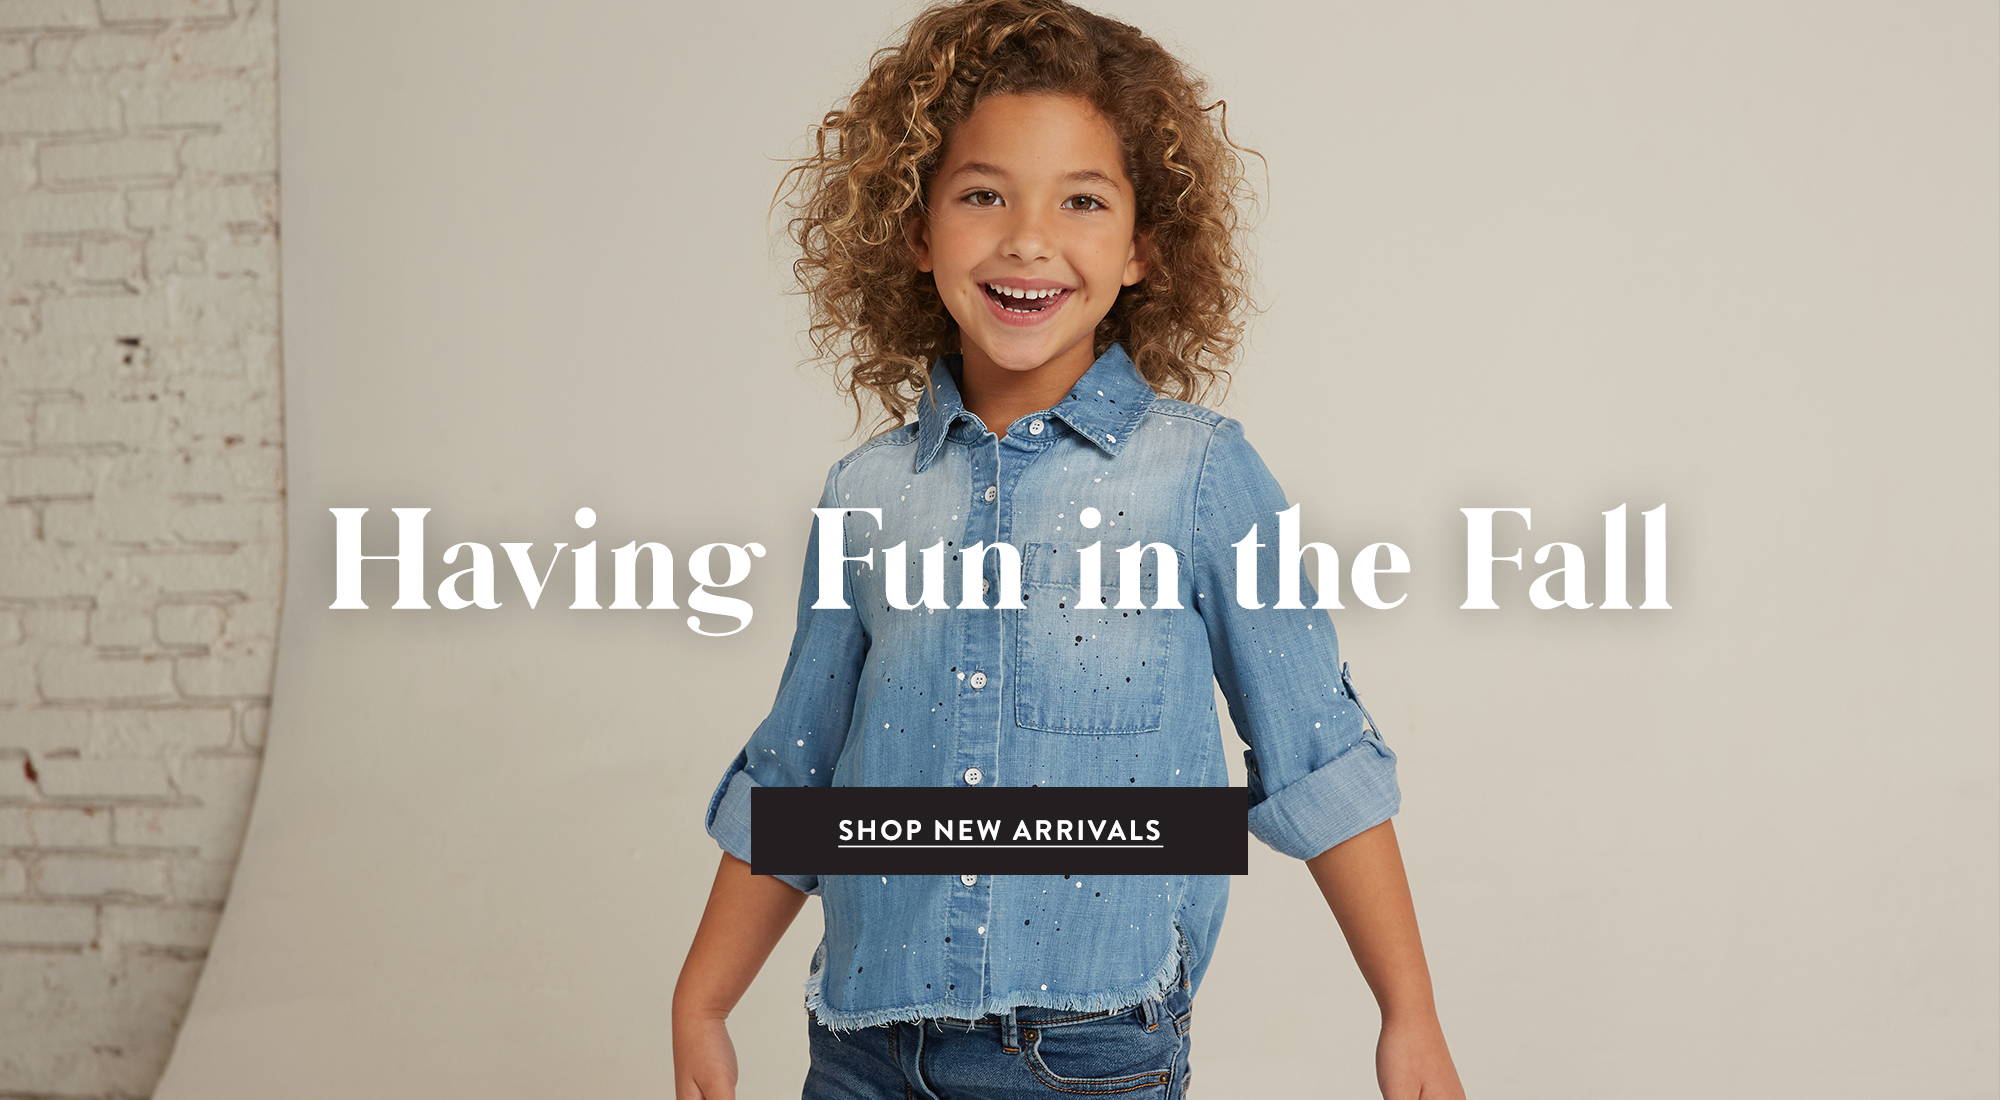 shop new arrivals - a child wearing blue denim jeans and a blue denim button-up